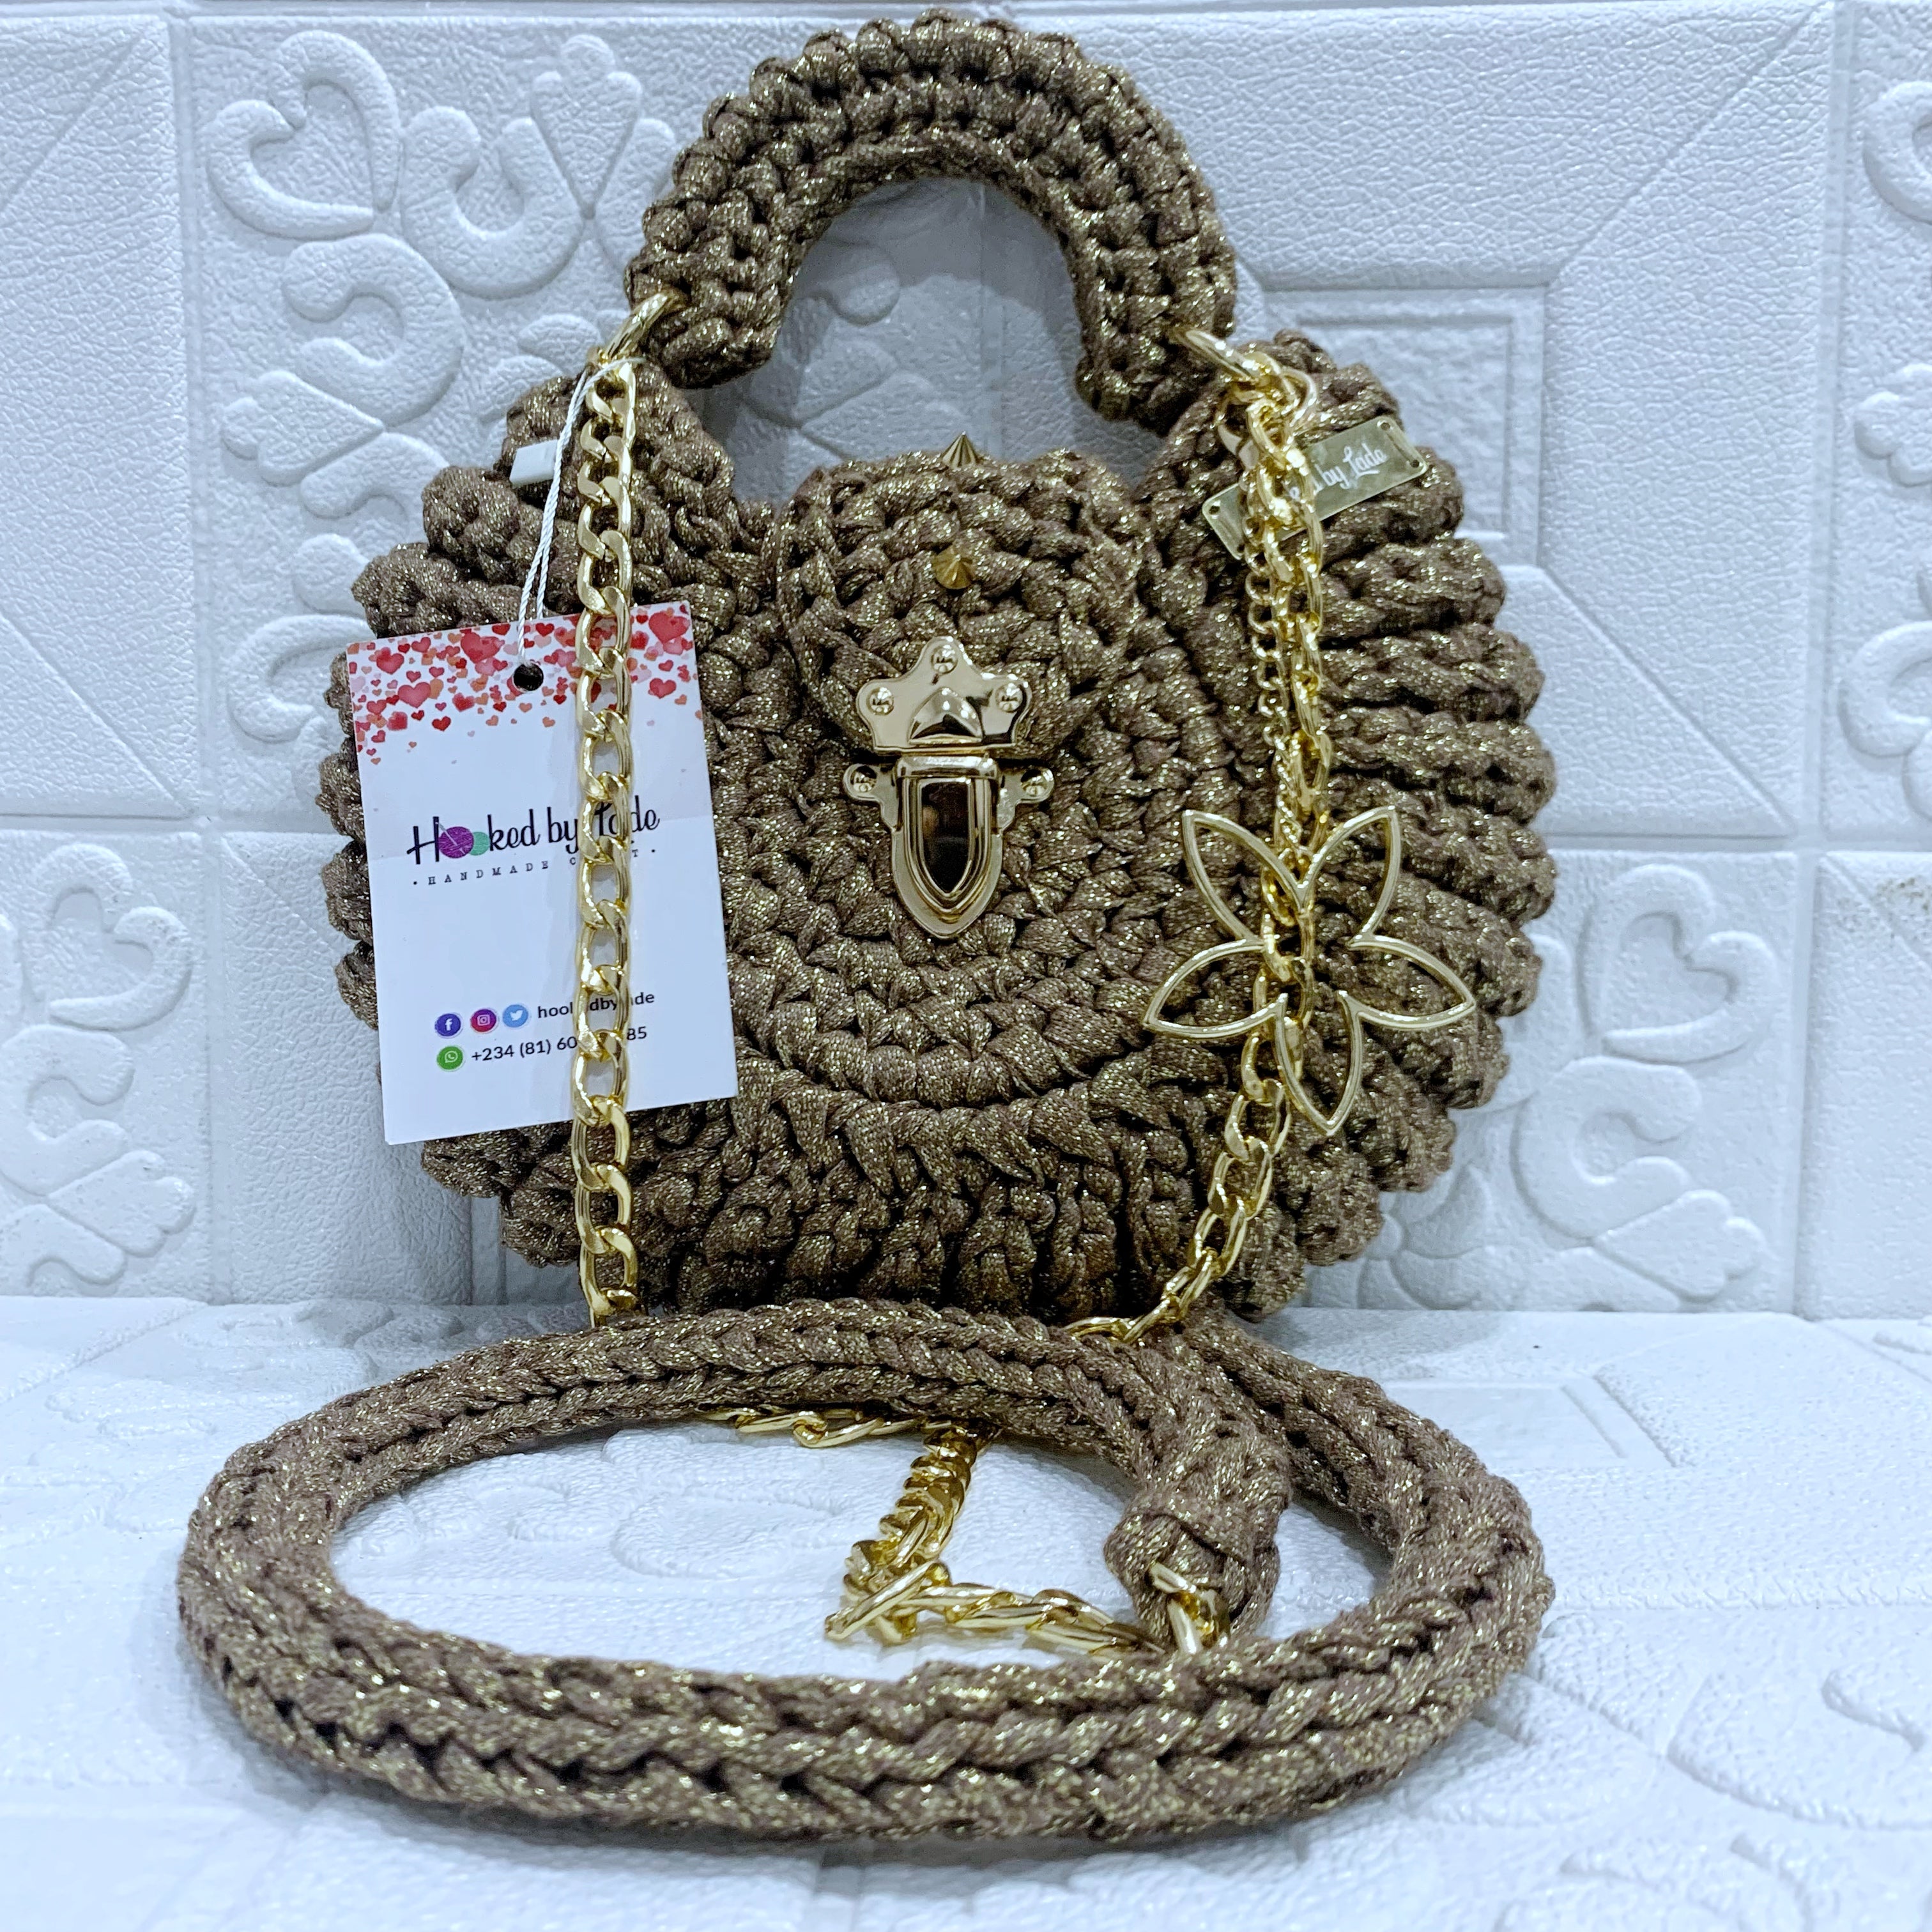 Shop Crochet Bags Handmade online | Lazada.com.ph